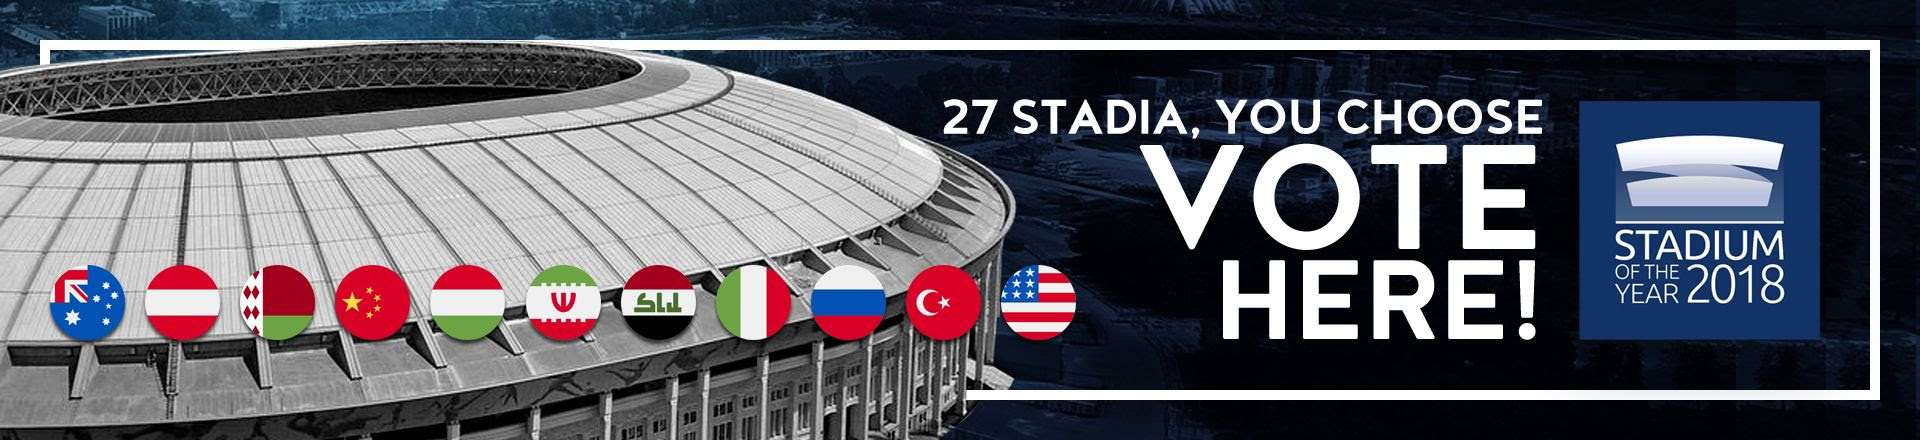 Stadium of the Year 2018